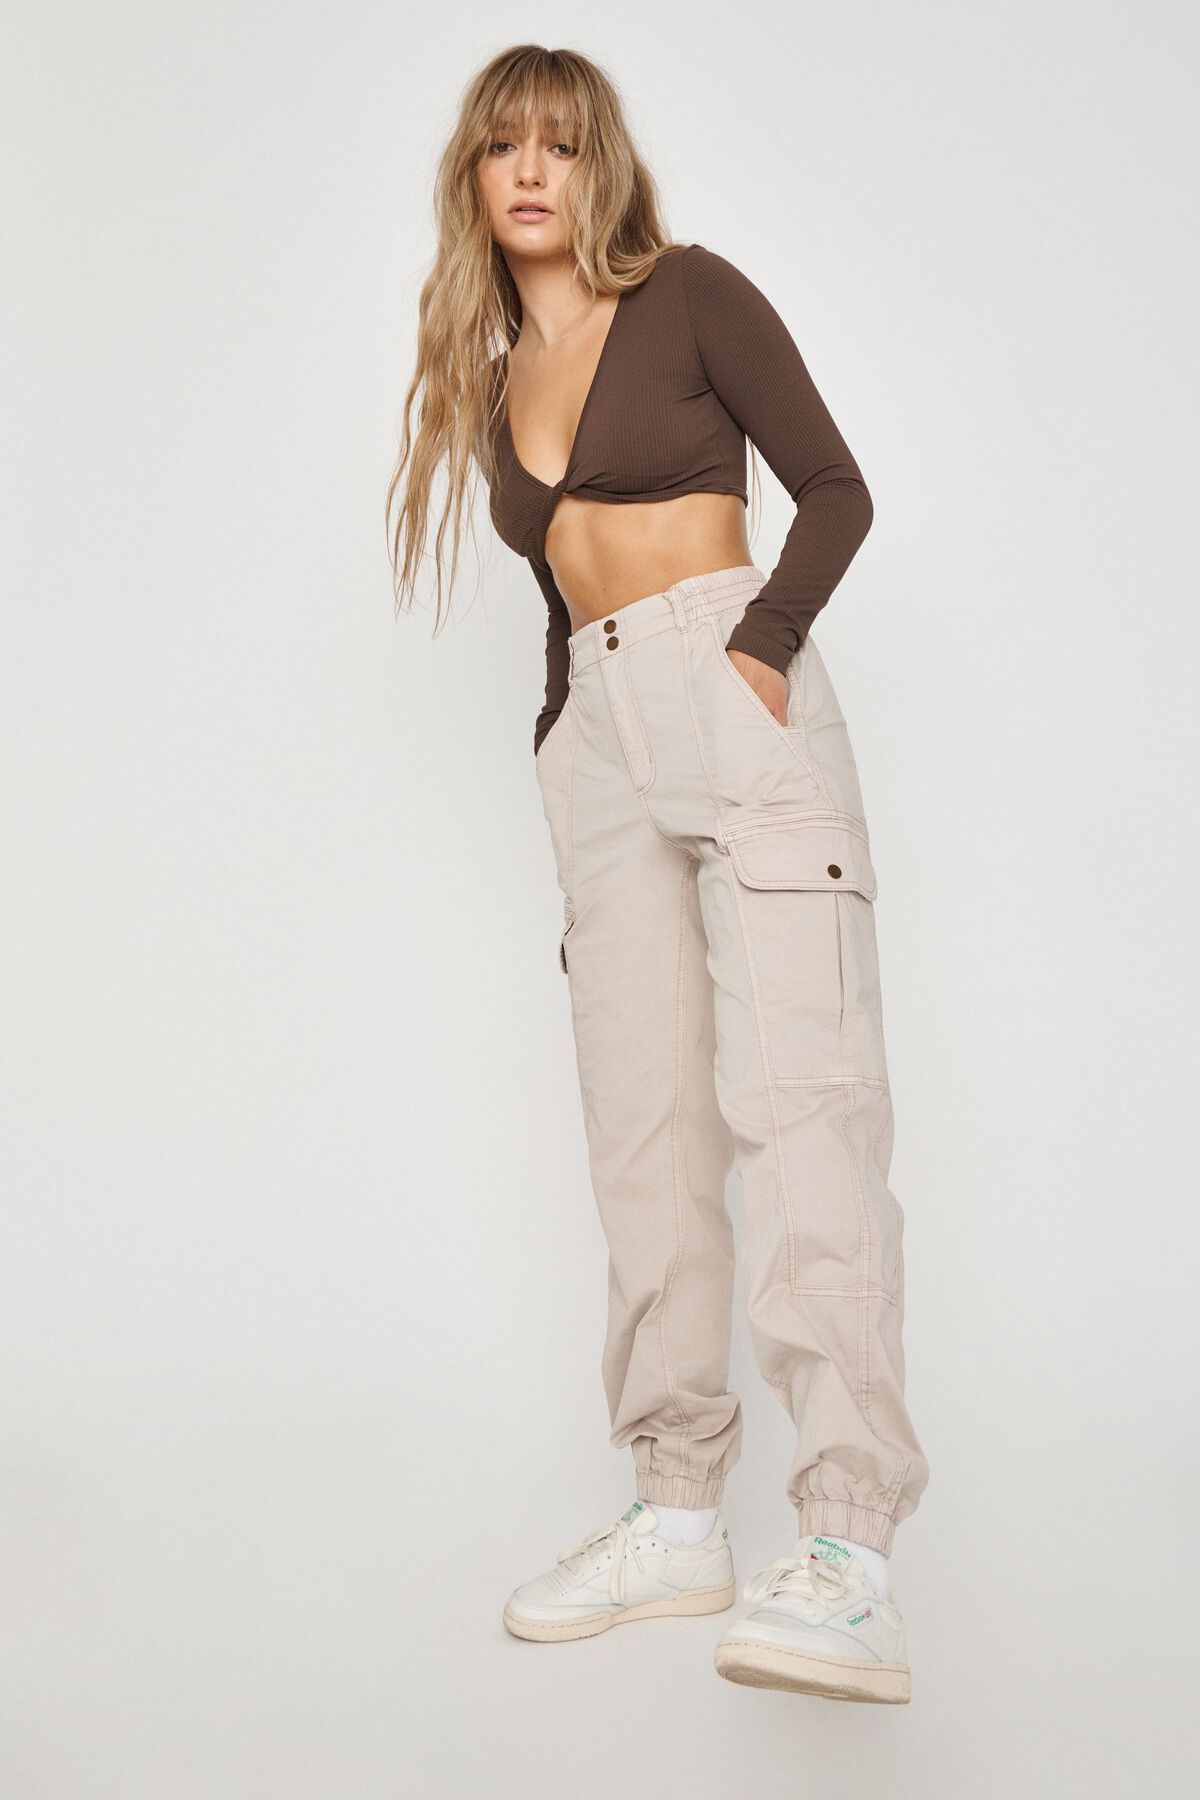 Brianna Bubble Pant | Garage Clothing